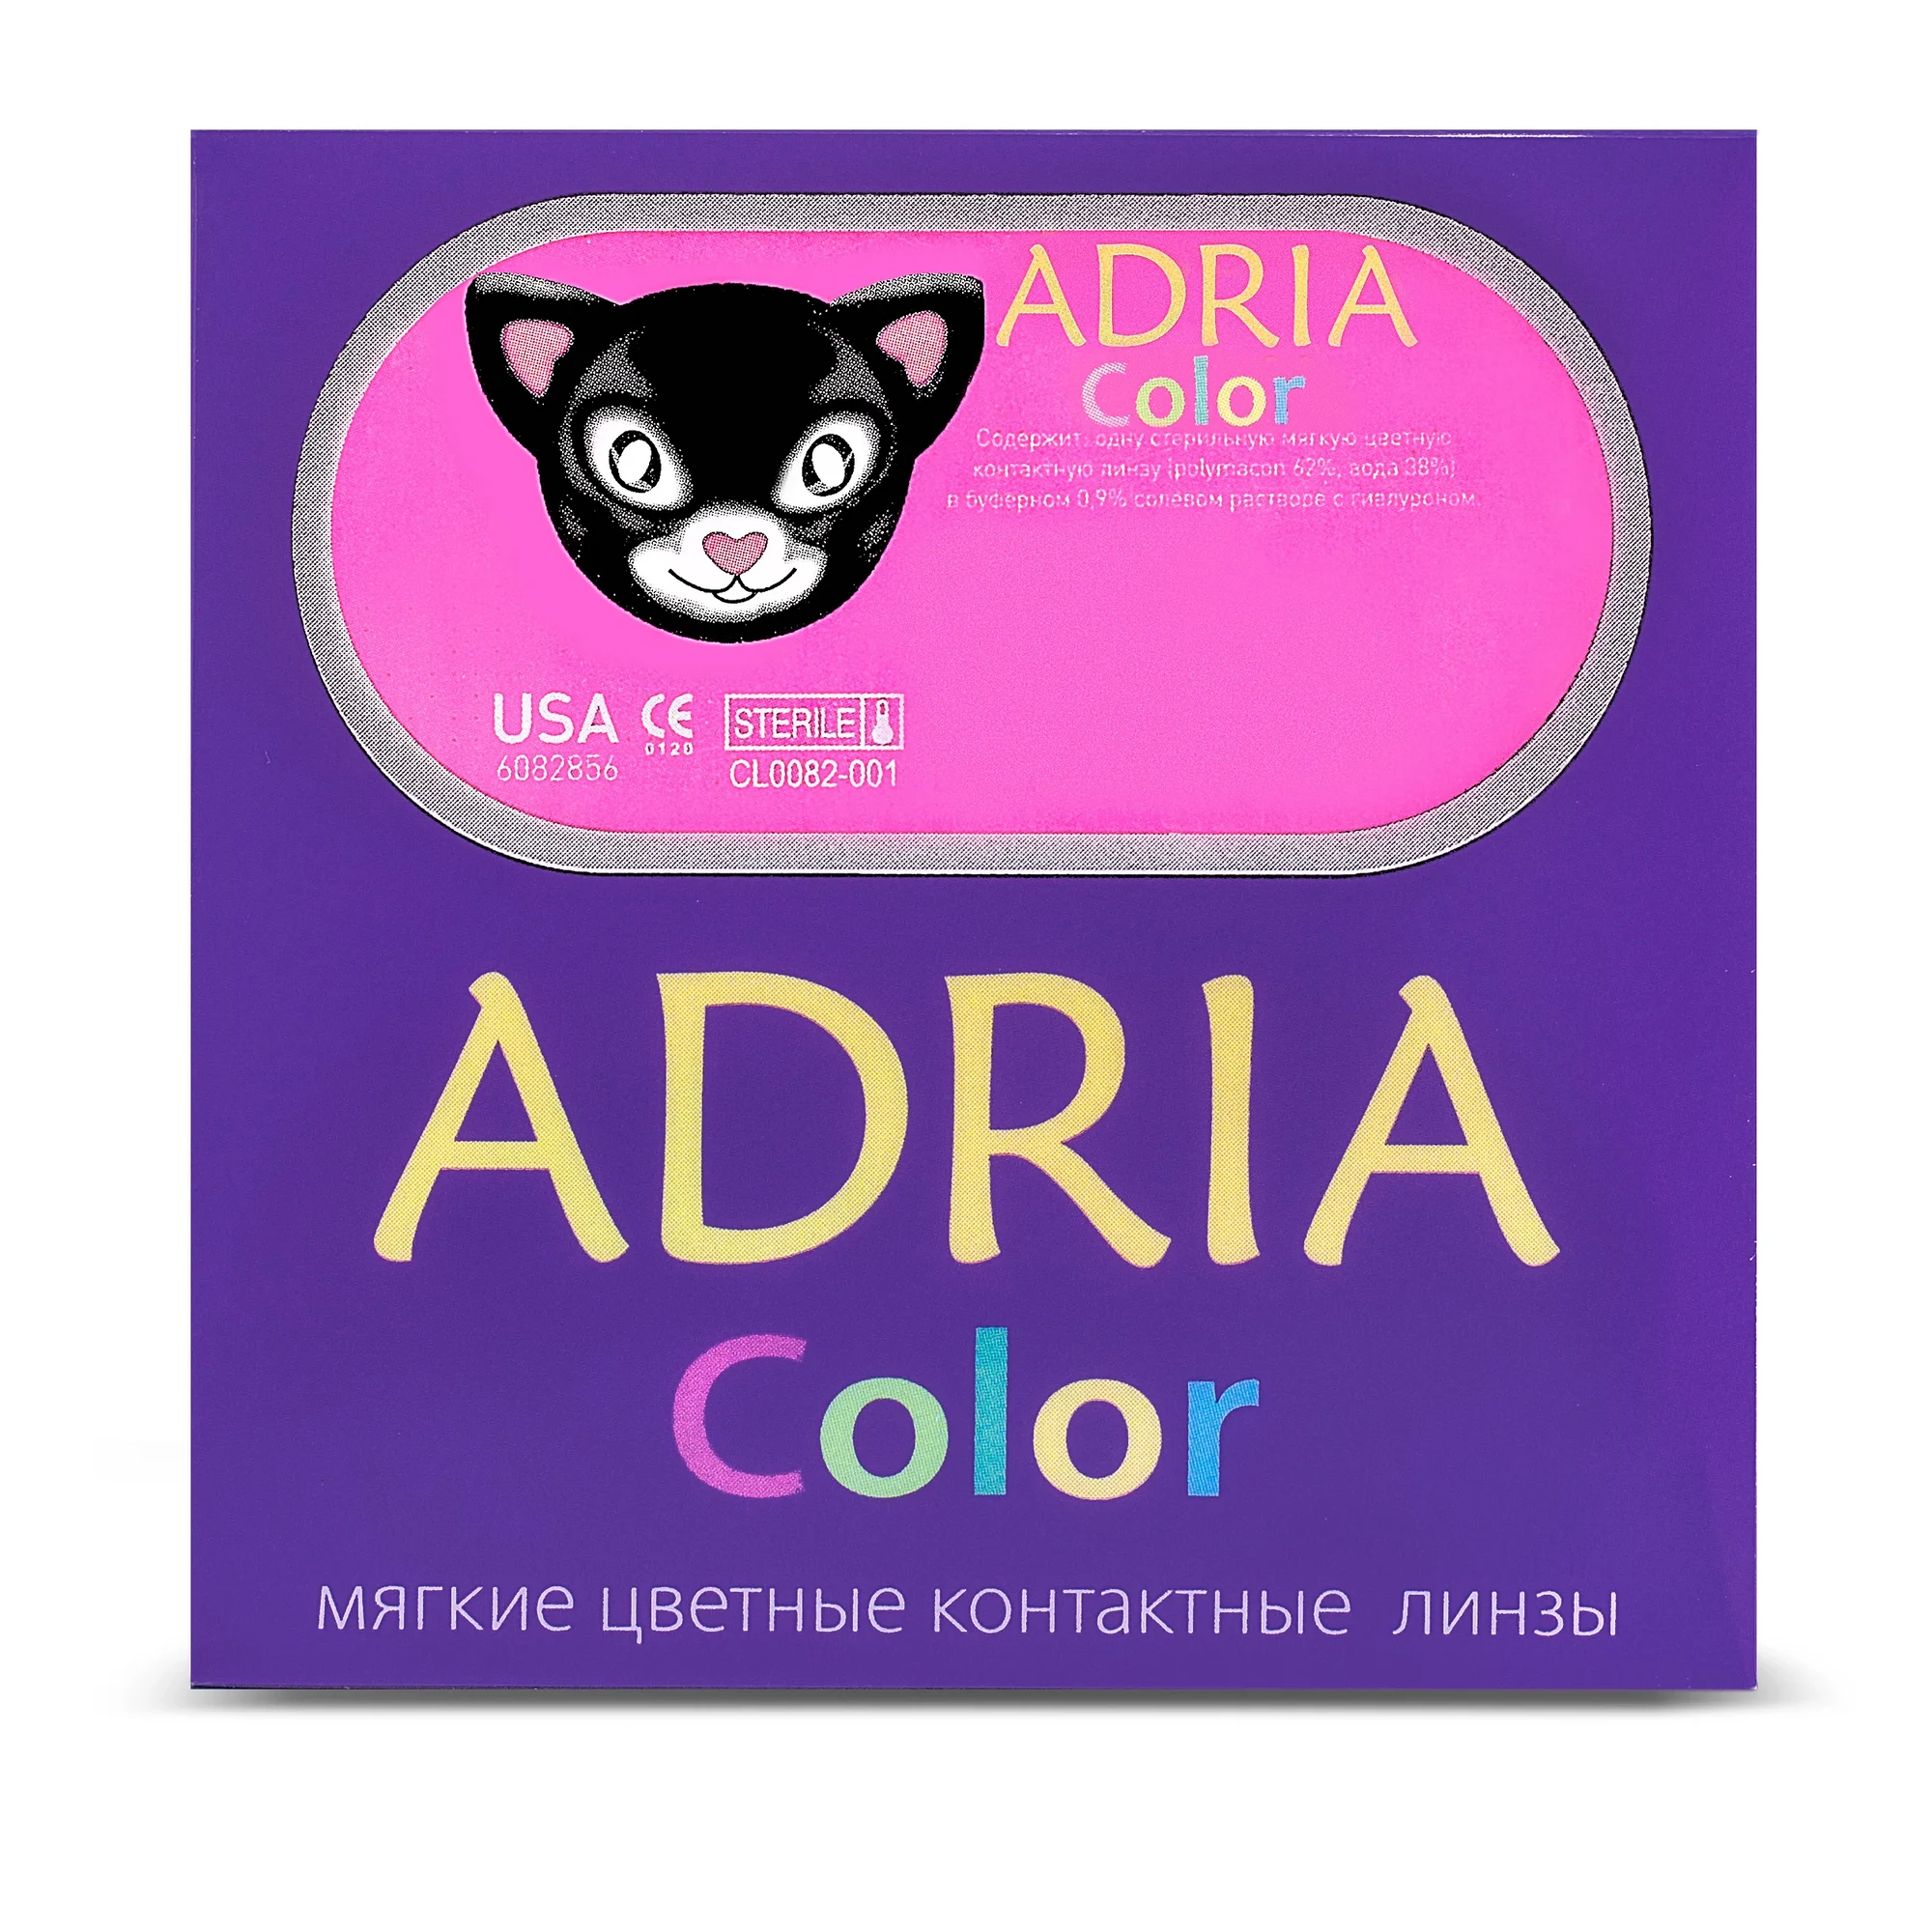 COLOR BOX ADRIA Color 1 Tone Gray (серый)